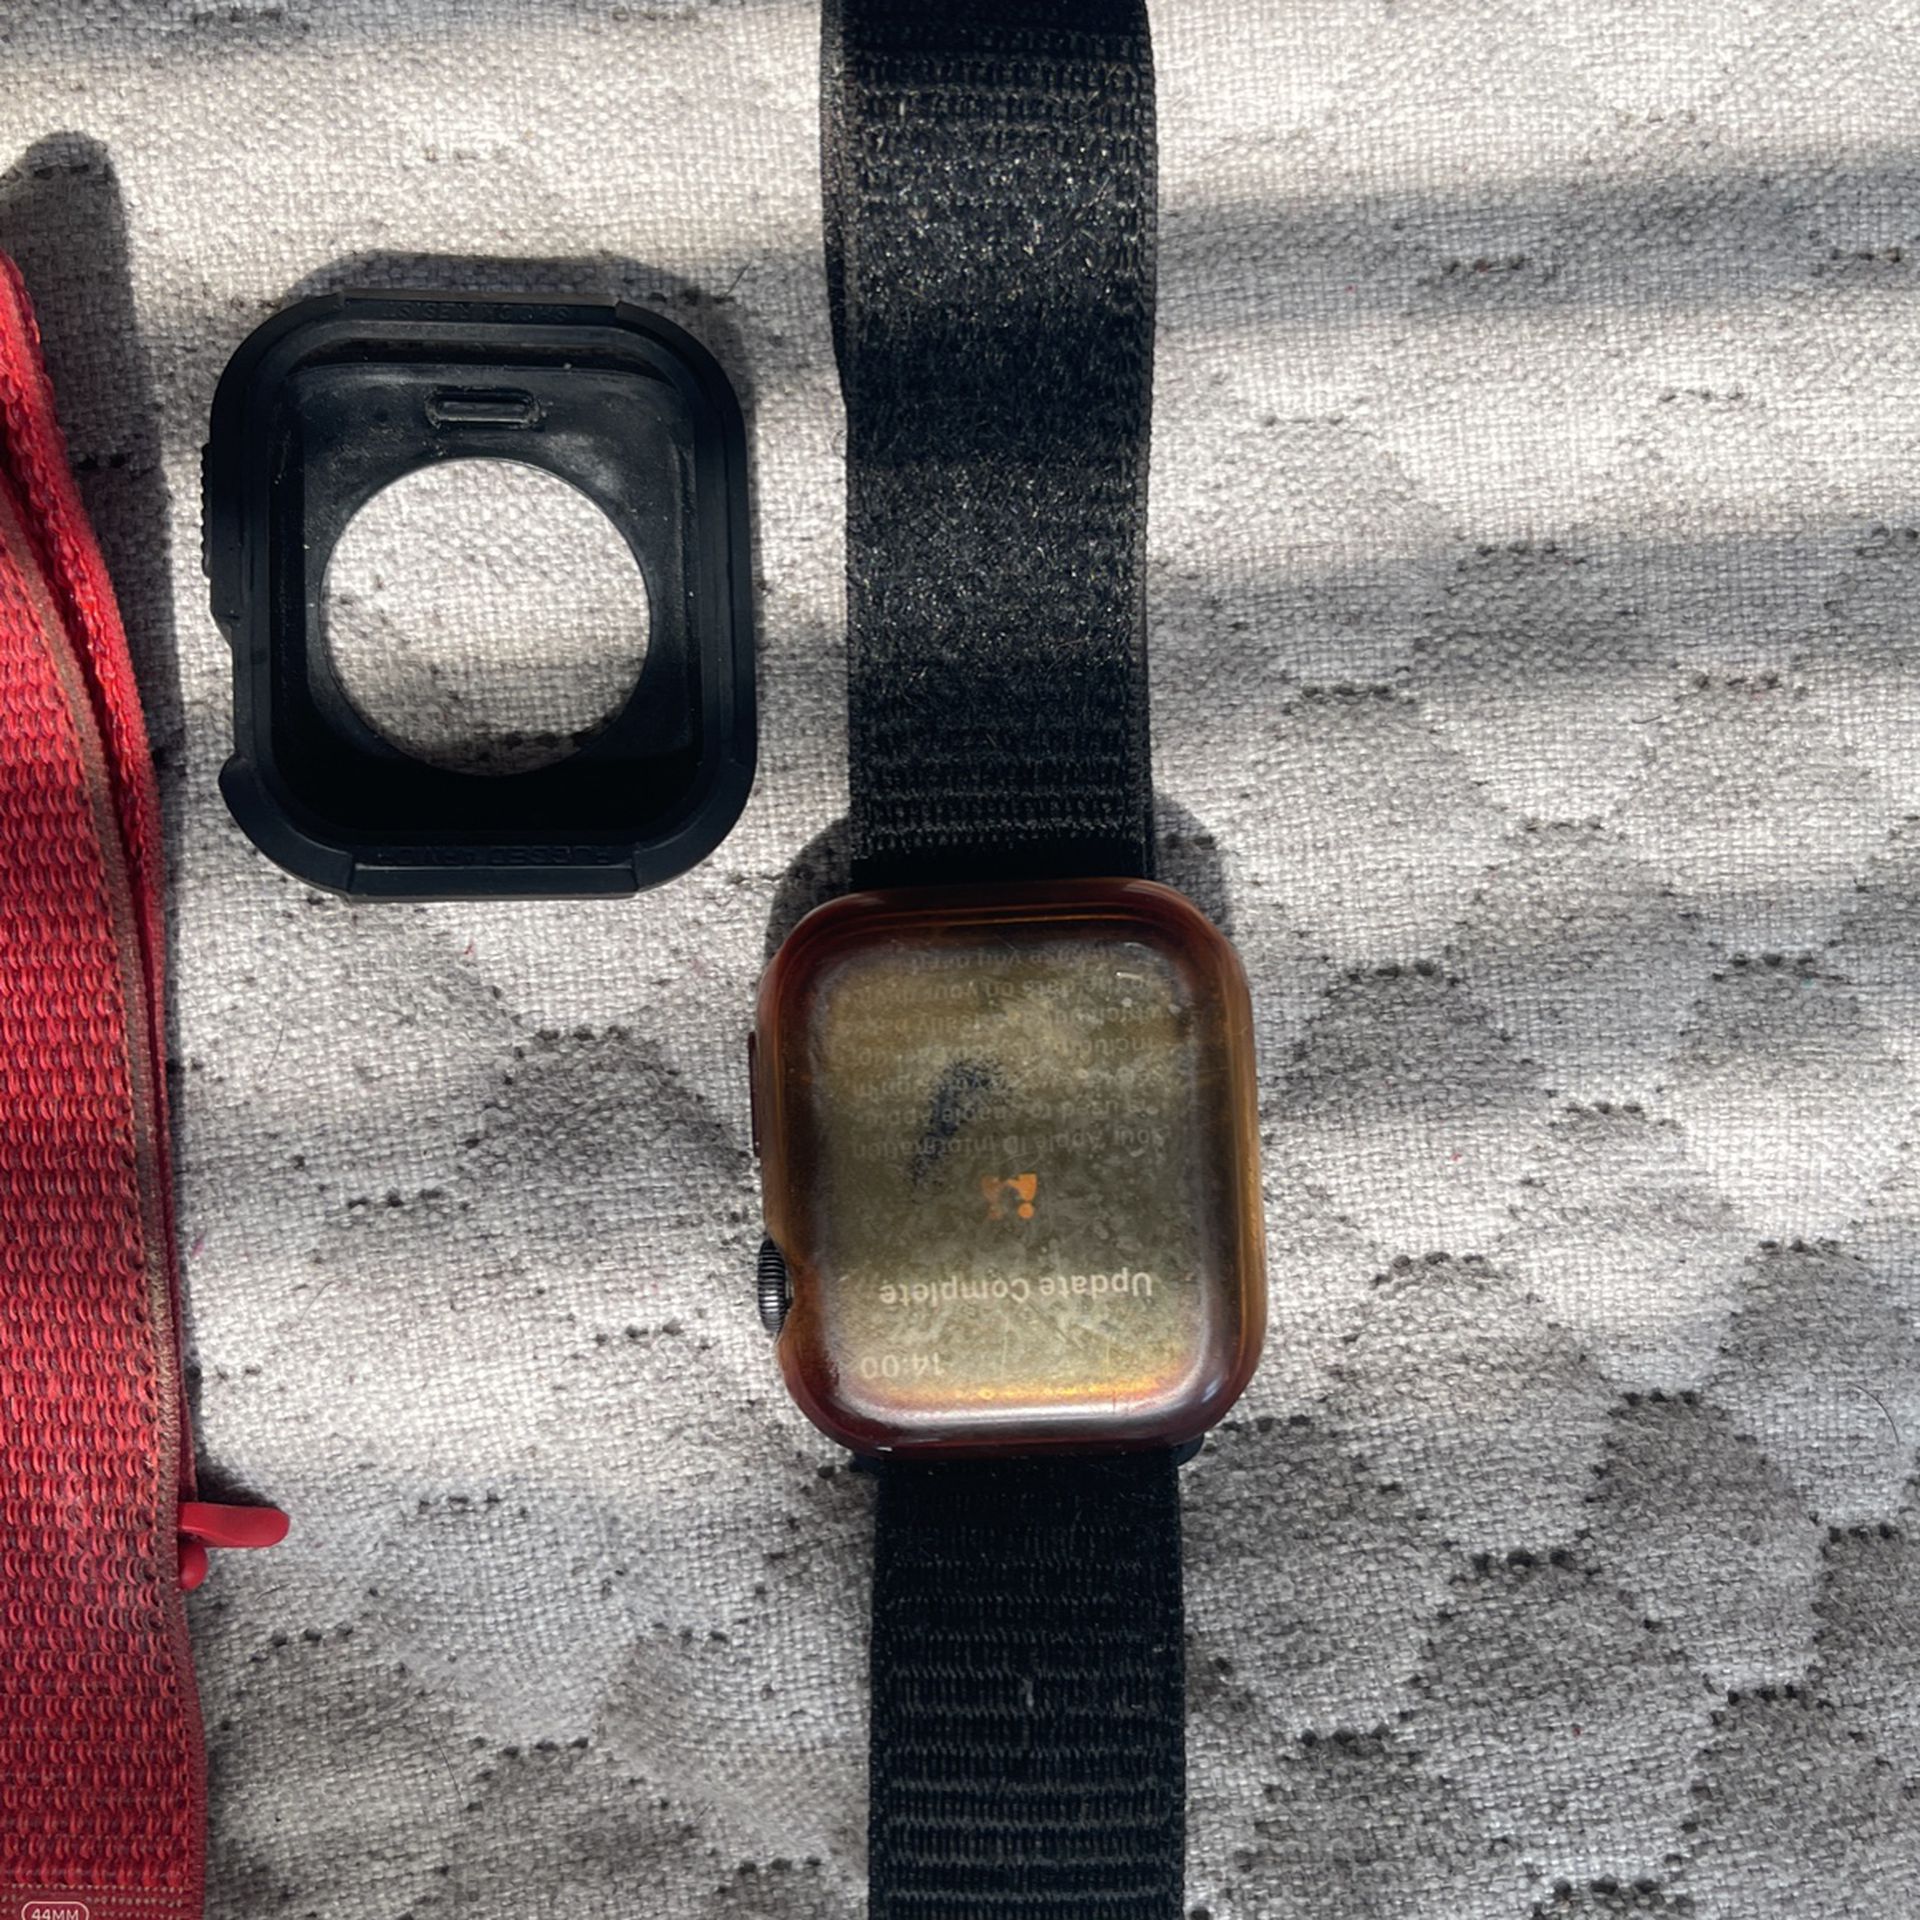 Apple Watch Series 5 44mm 